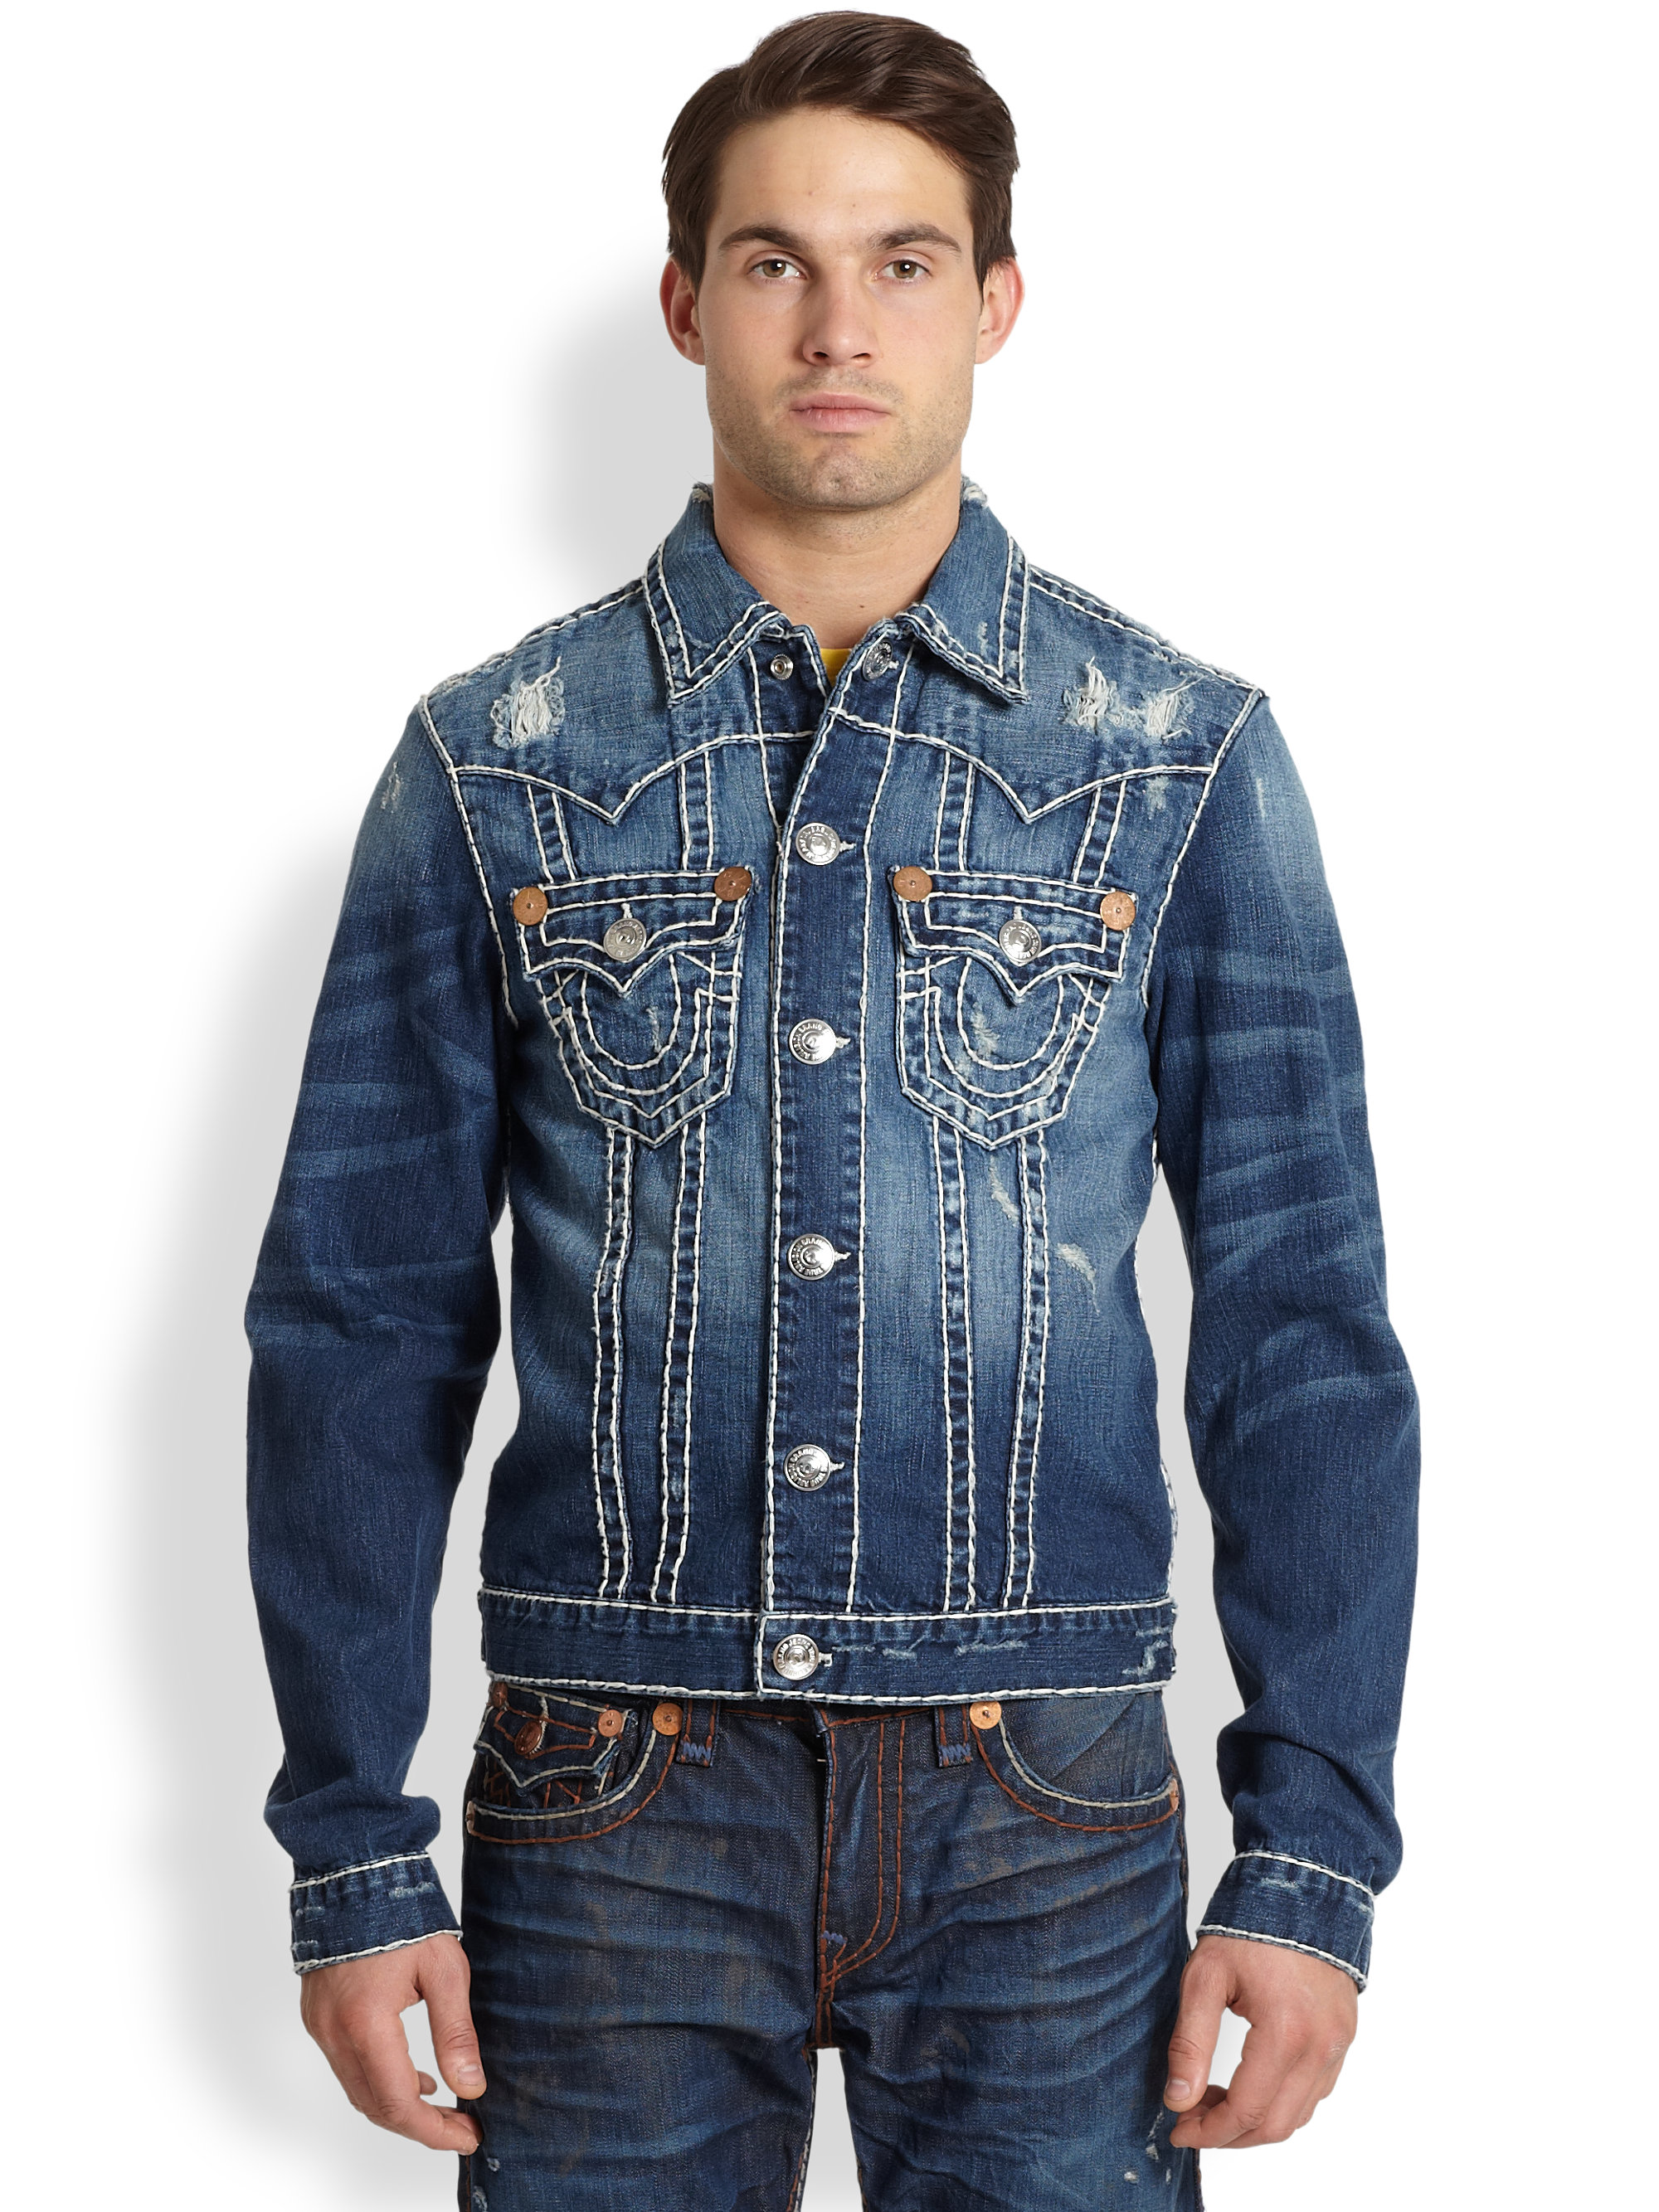 Lyst - True Religion Jimmy Super T Denim Jacket in Blue for Men